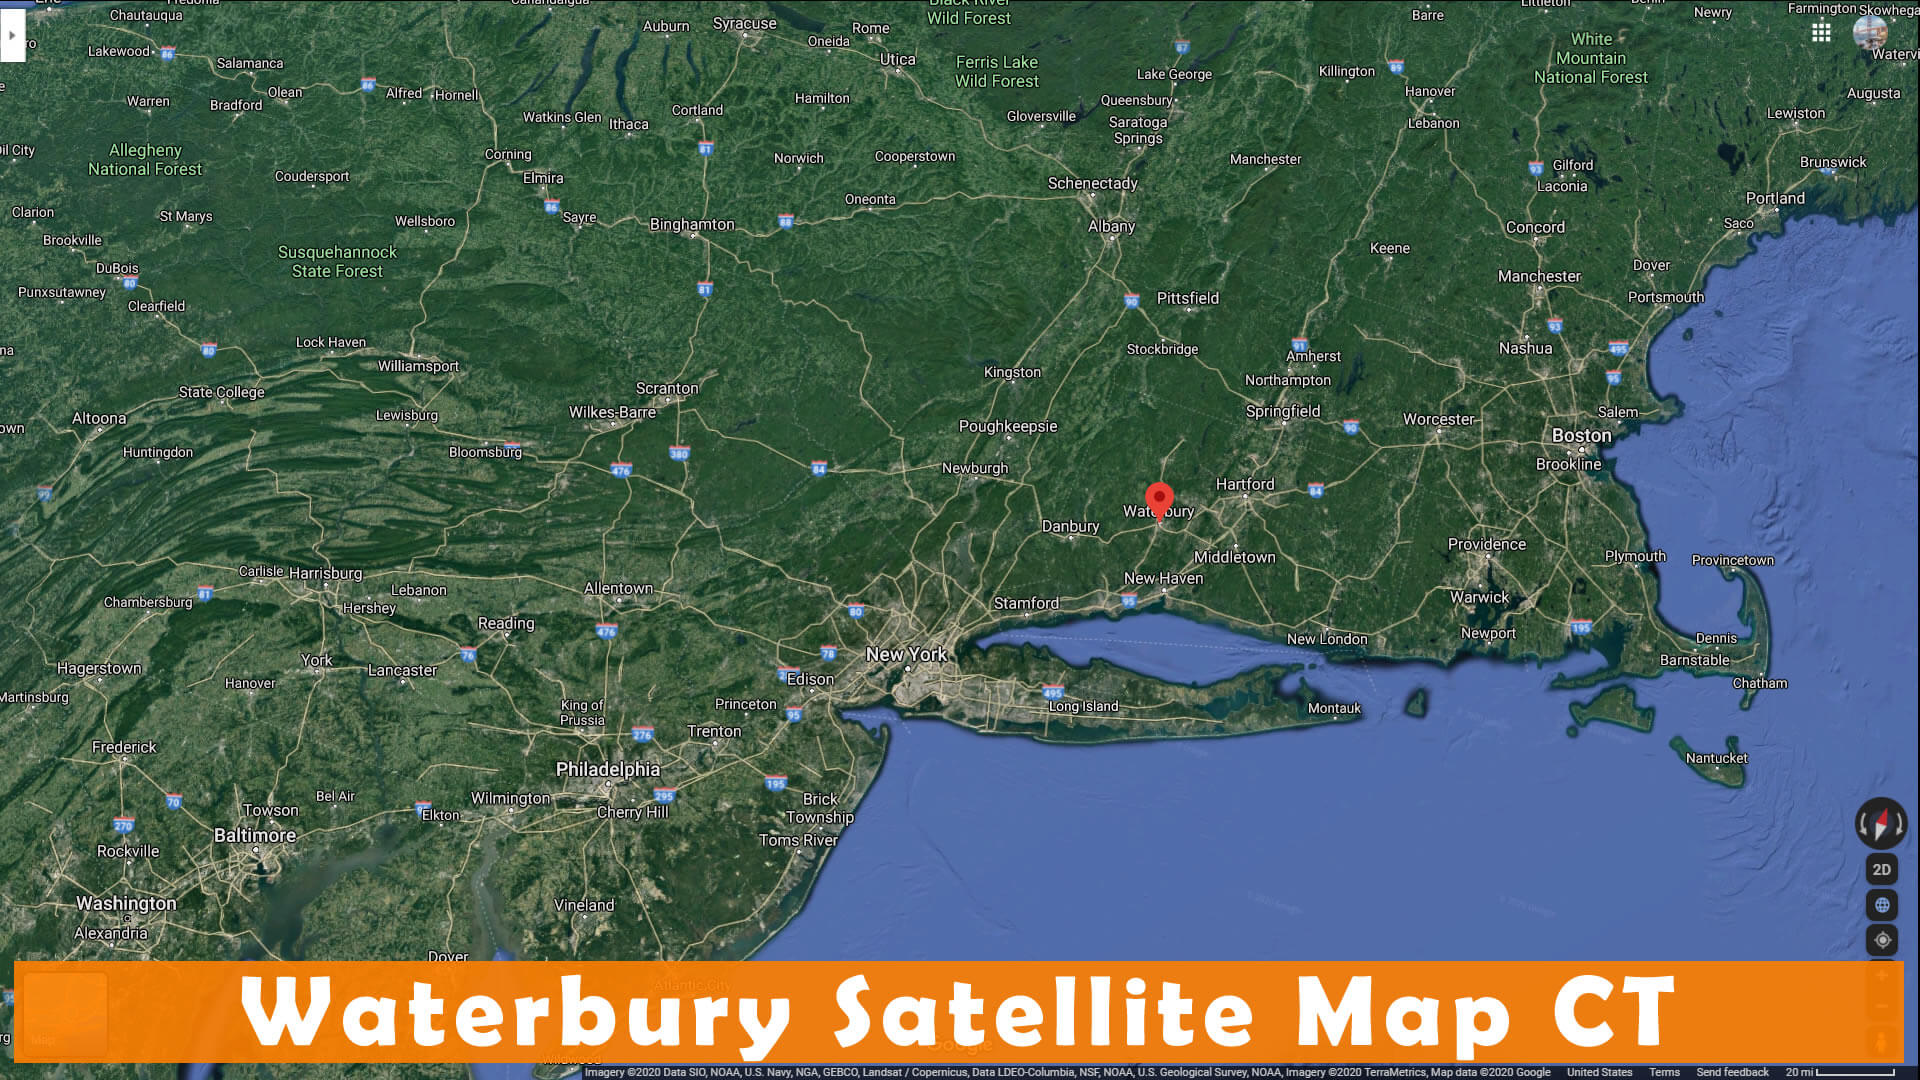 Waterbury Satellite Map CT